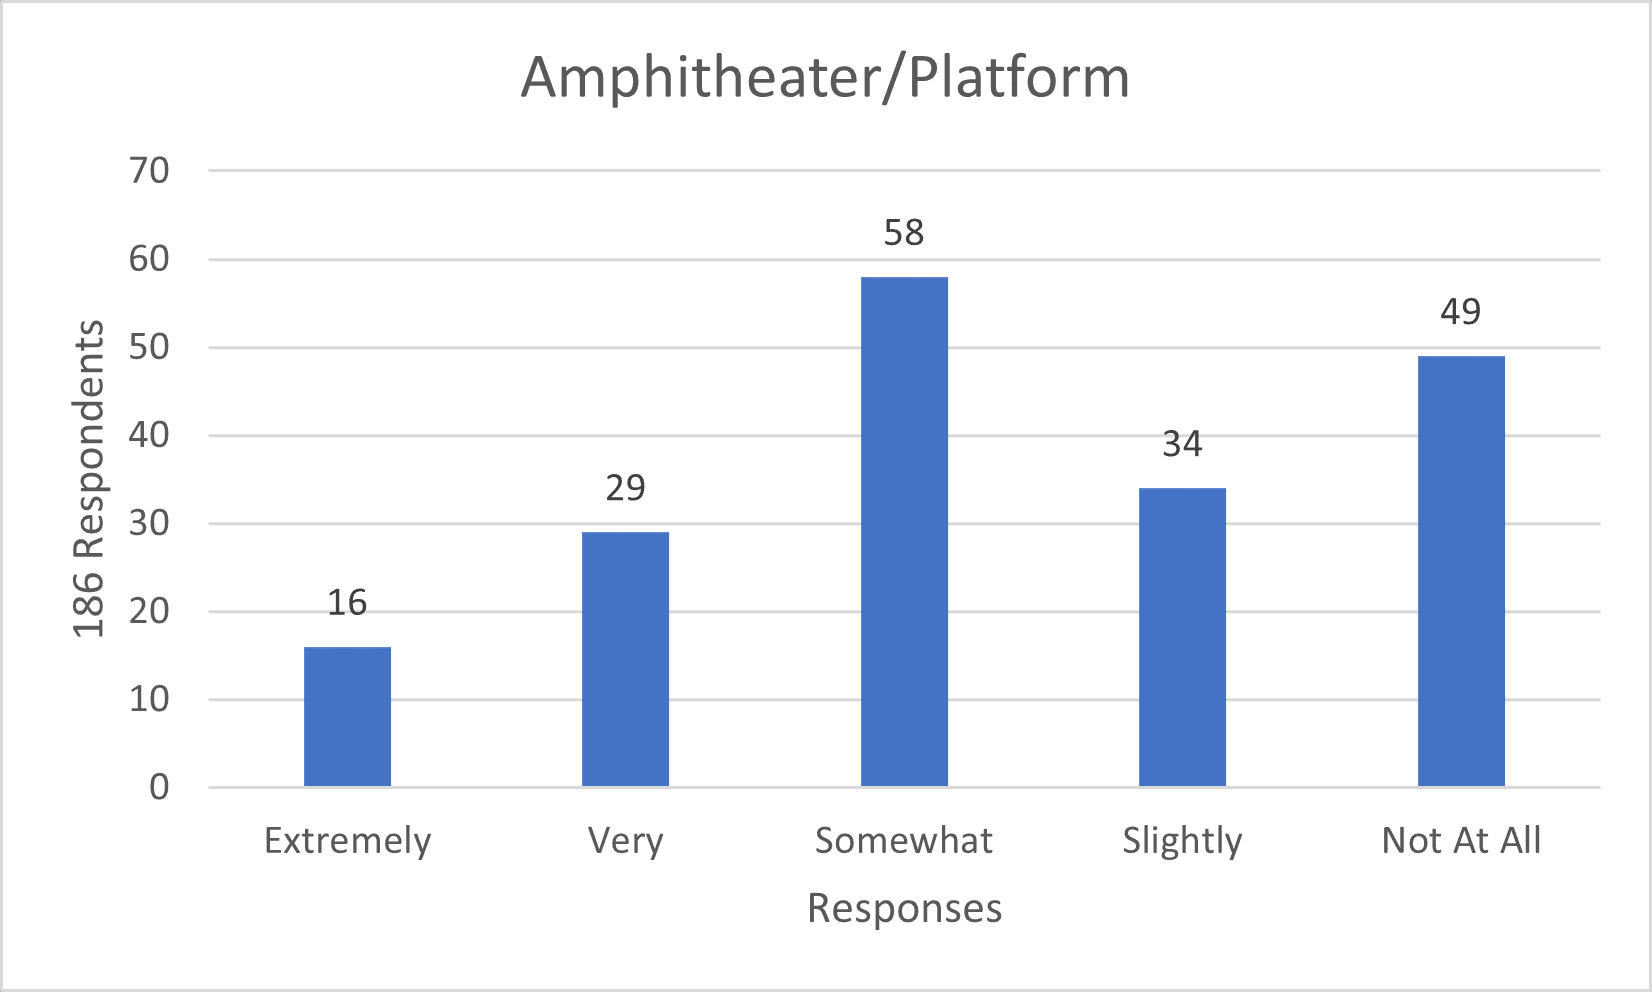 Amphitheater/Platform